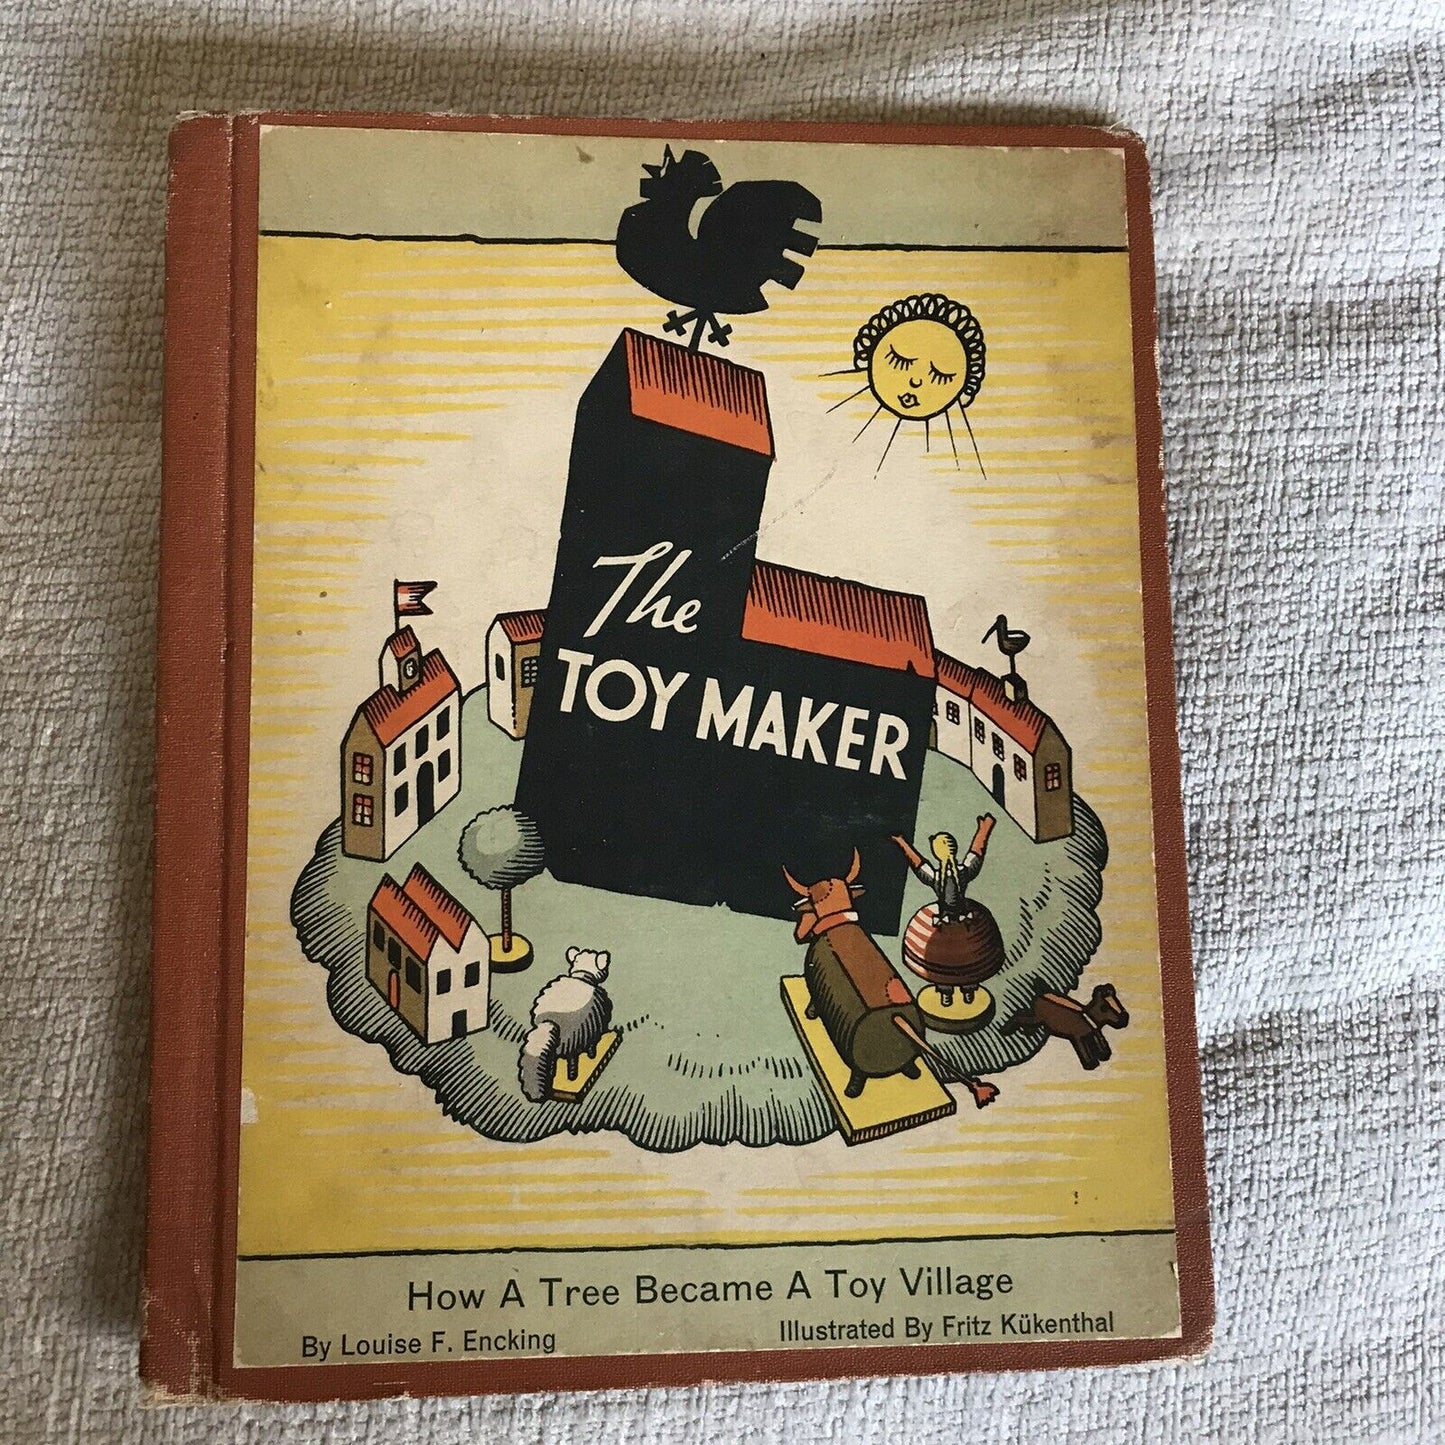 1935 The Toy Maker - Louise F. Encking (illust Fritz Kükenthal)